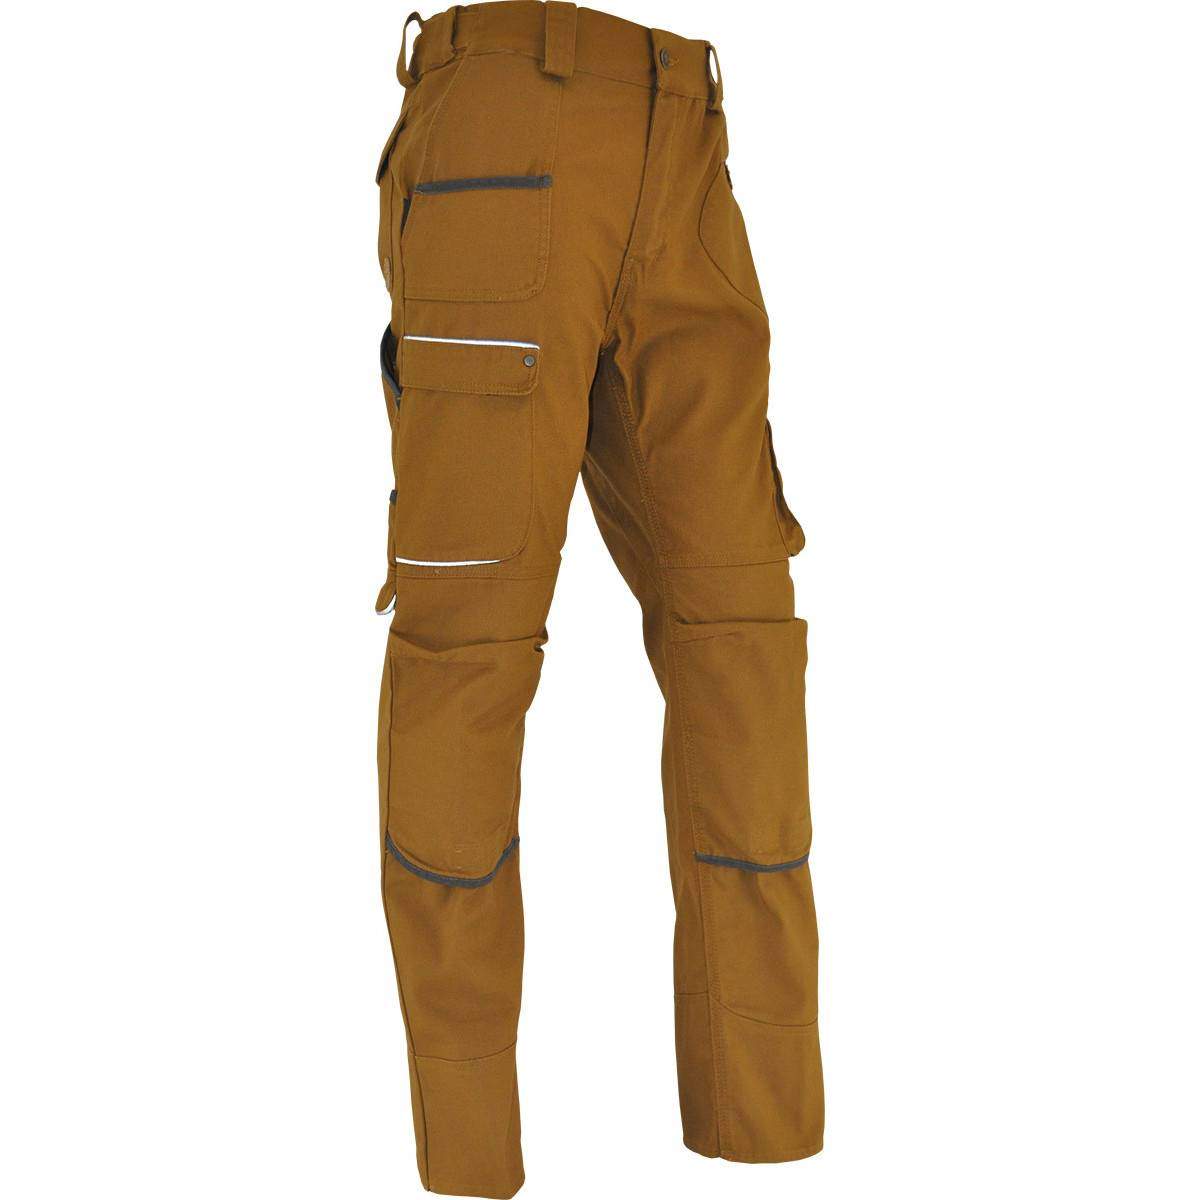 Pantalones de trabajo SAHARA talla 42, bronce